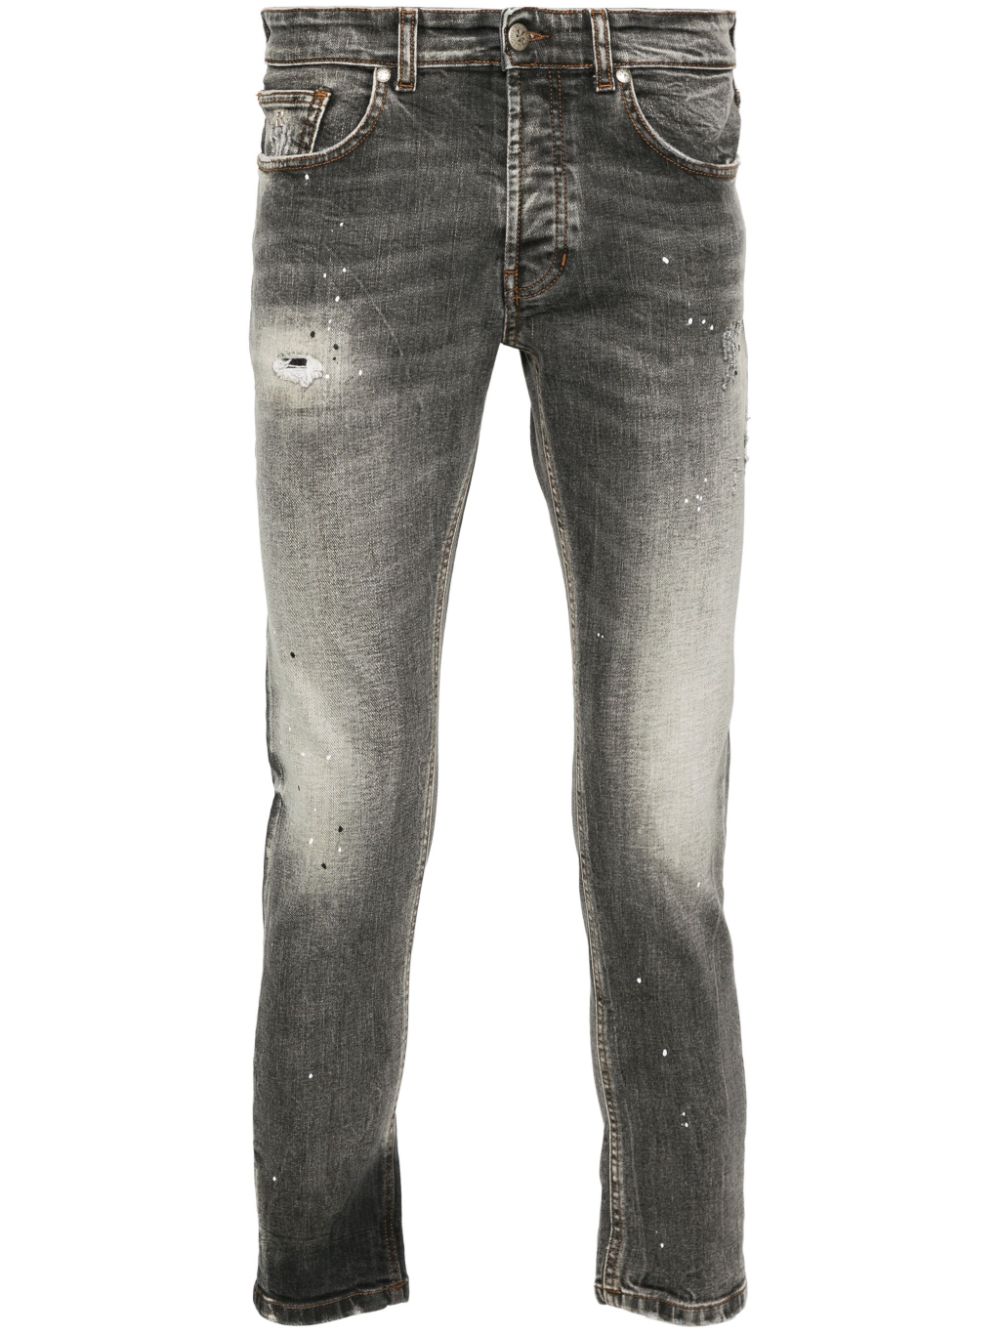 Jeans nero vintage